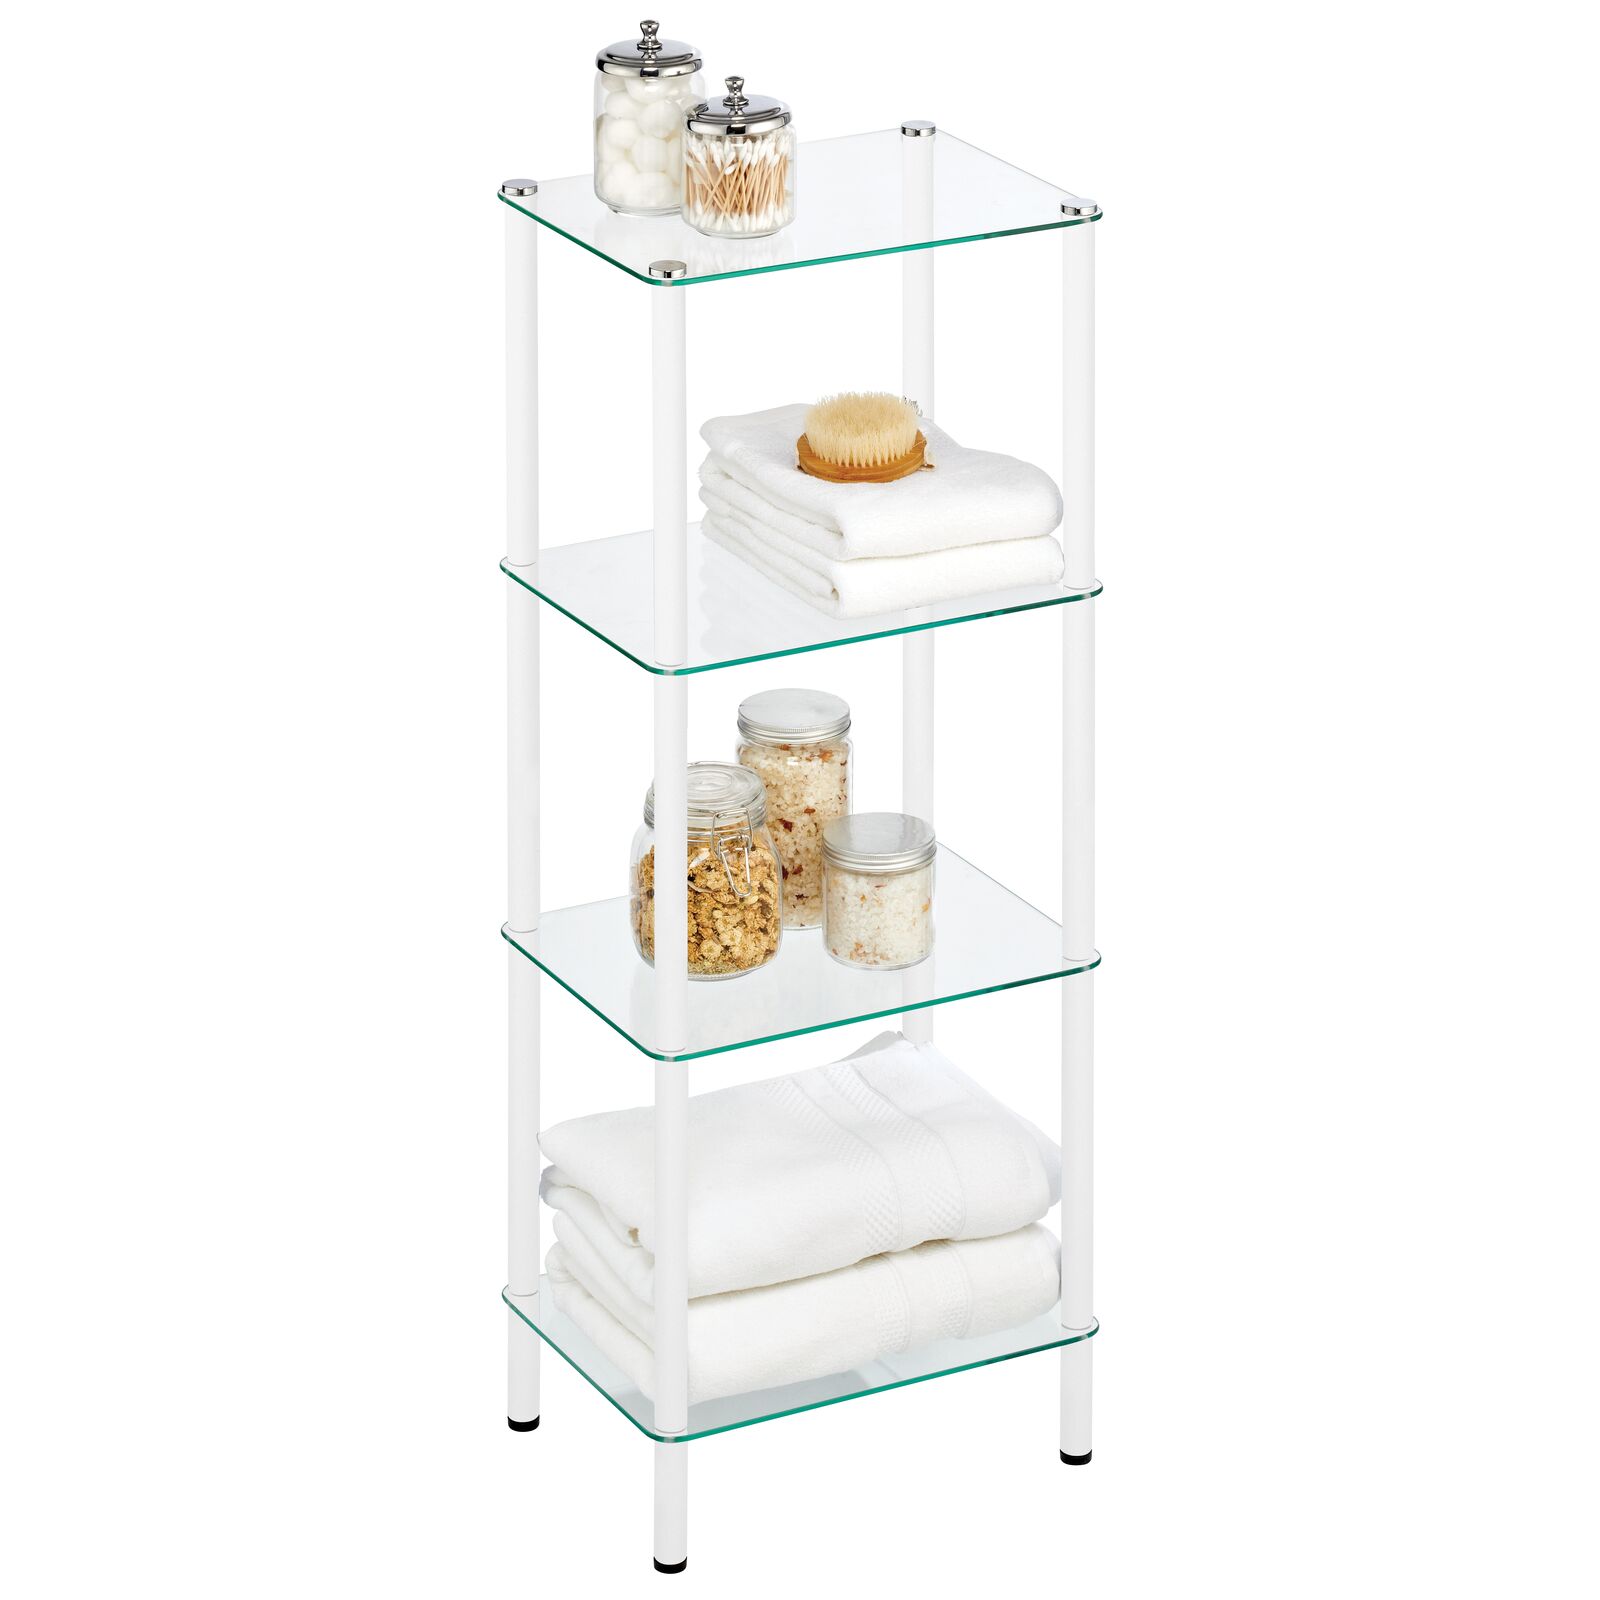 mDesign Tall 4-Tier Glass and Metal Freestanding Shelf Organizer Display Unit Narrow Shelves for Bathroom, Kitchen, Bedroom, Office Open Shelvin - 1